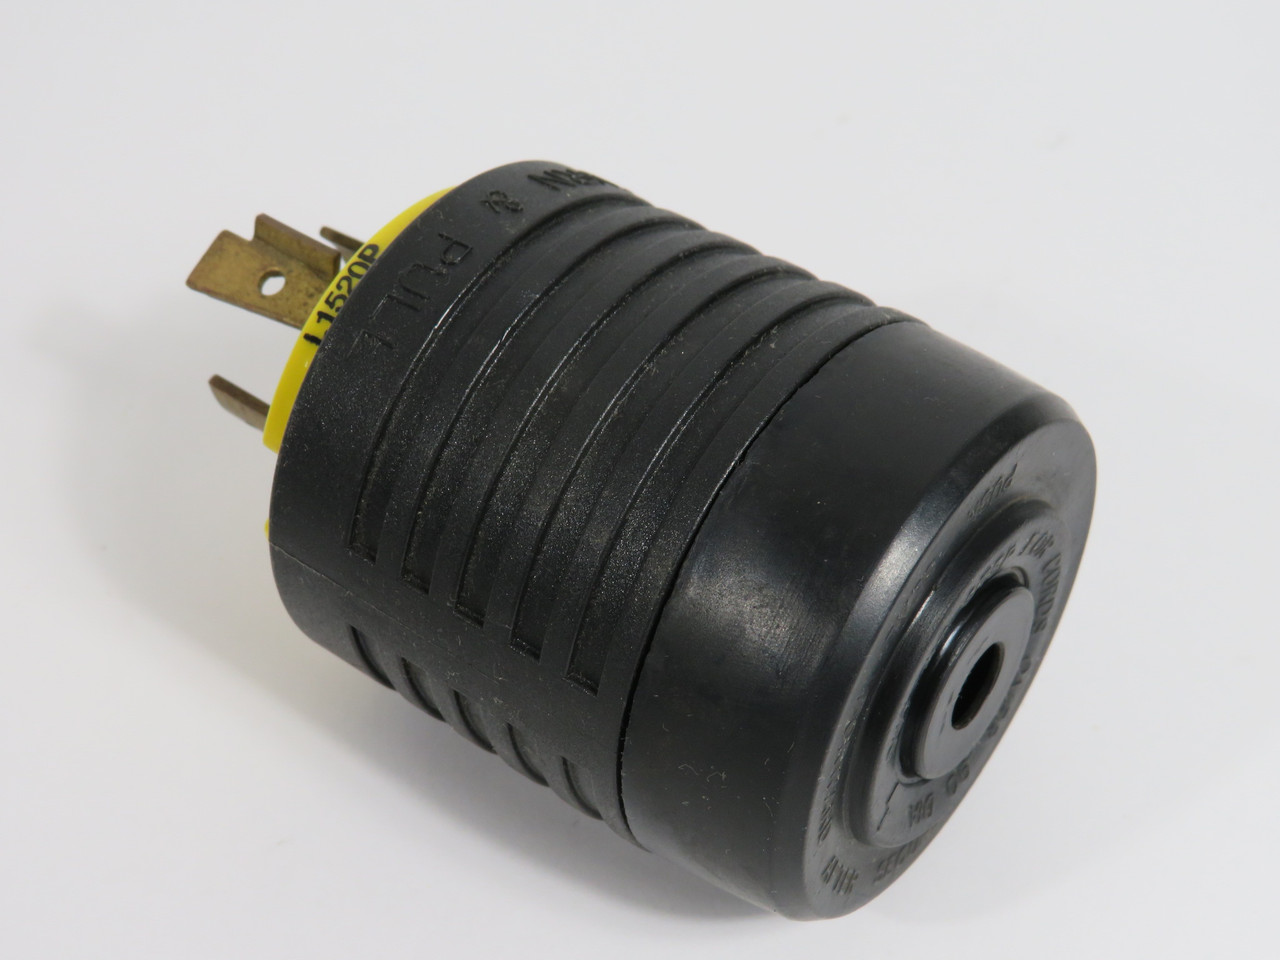 Pass & Seymour Legrand L1520-P Turnlok Plug 20A 250V 3-Pole 4-Wire USED